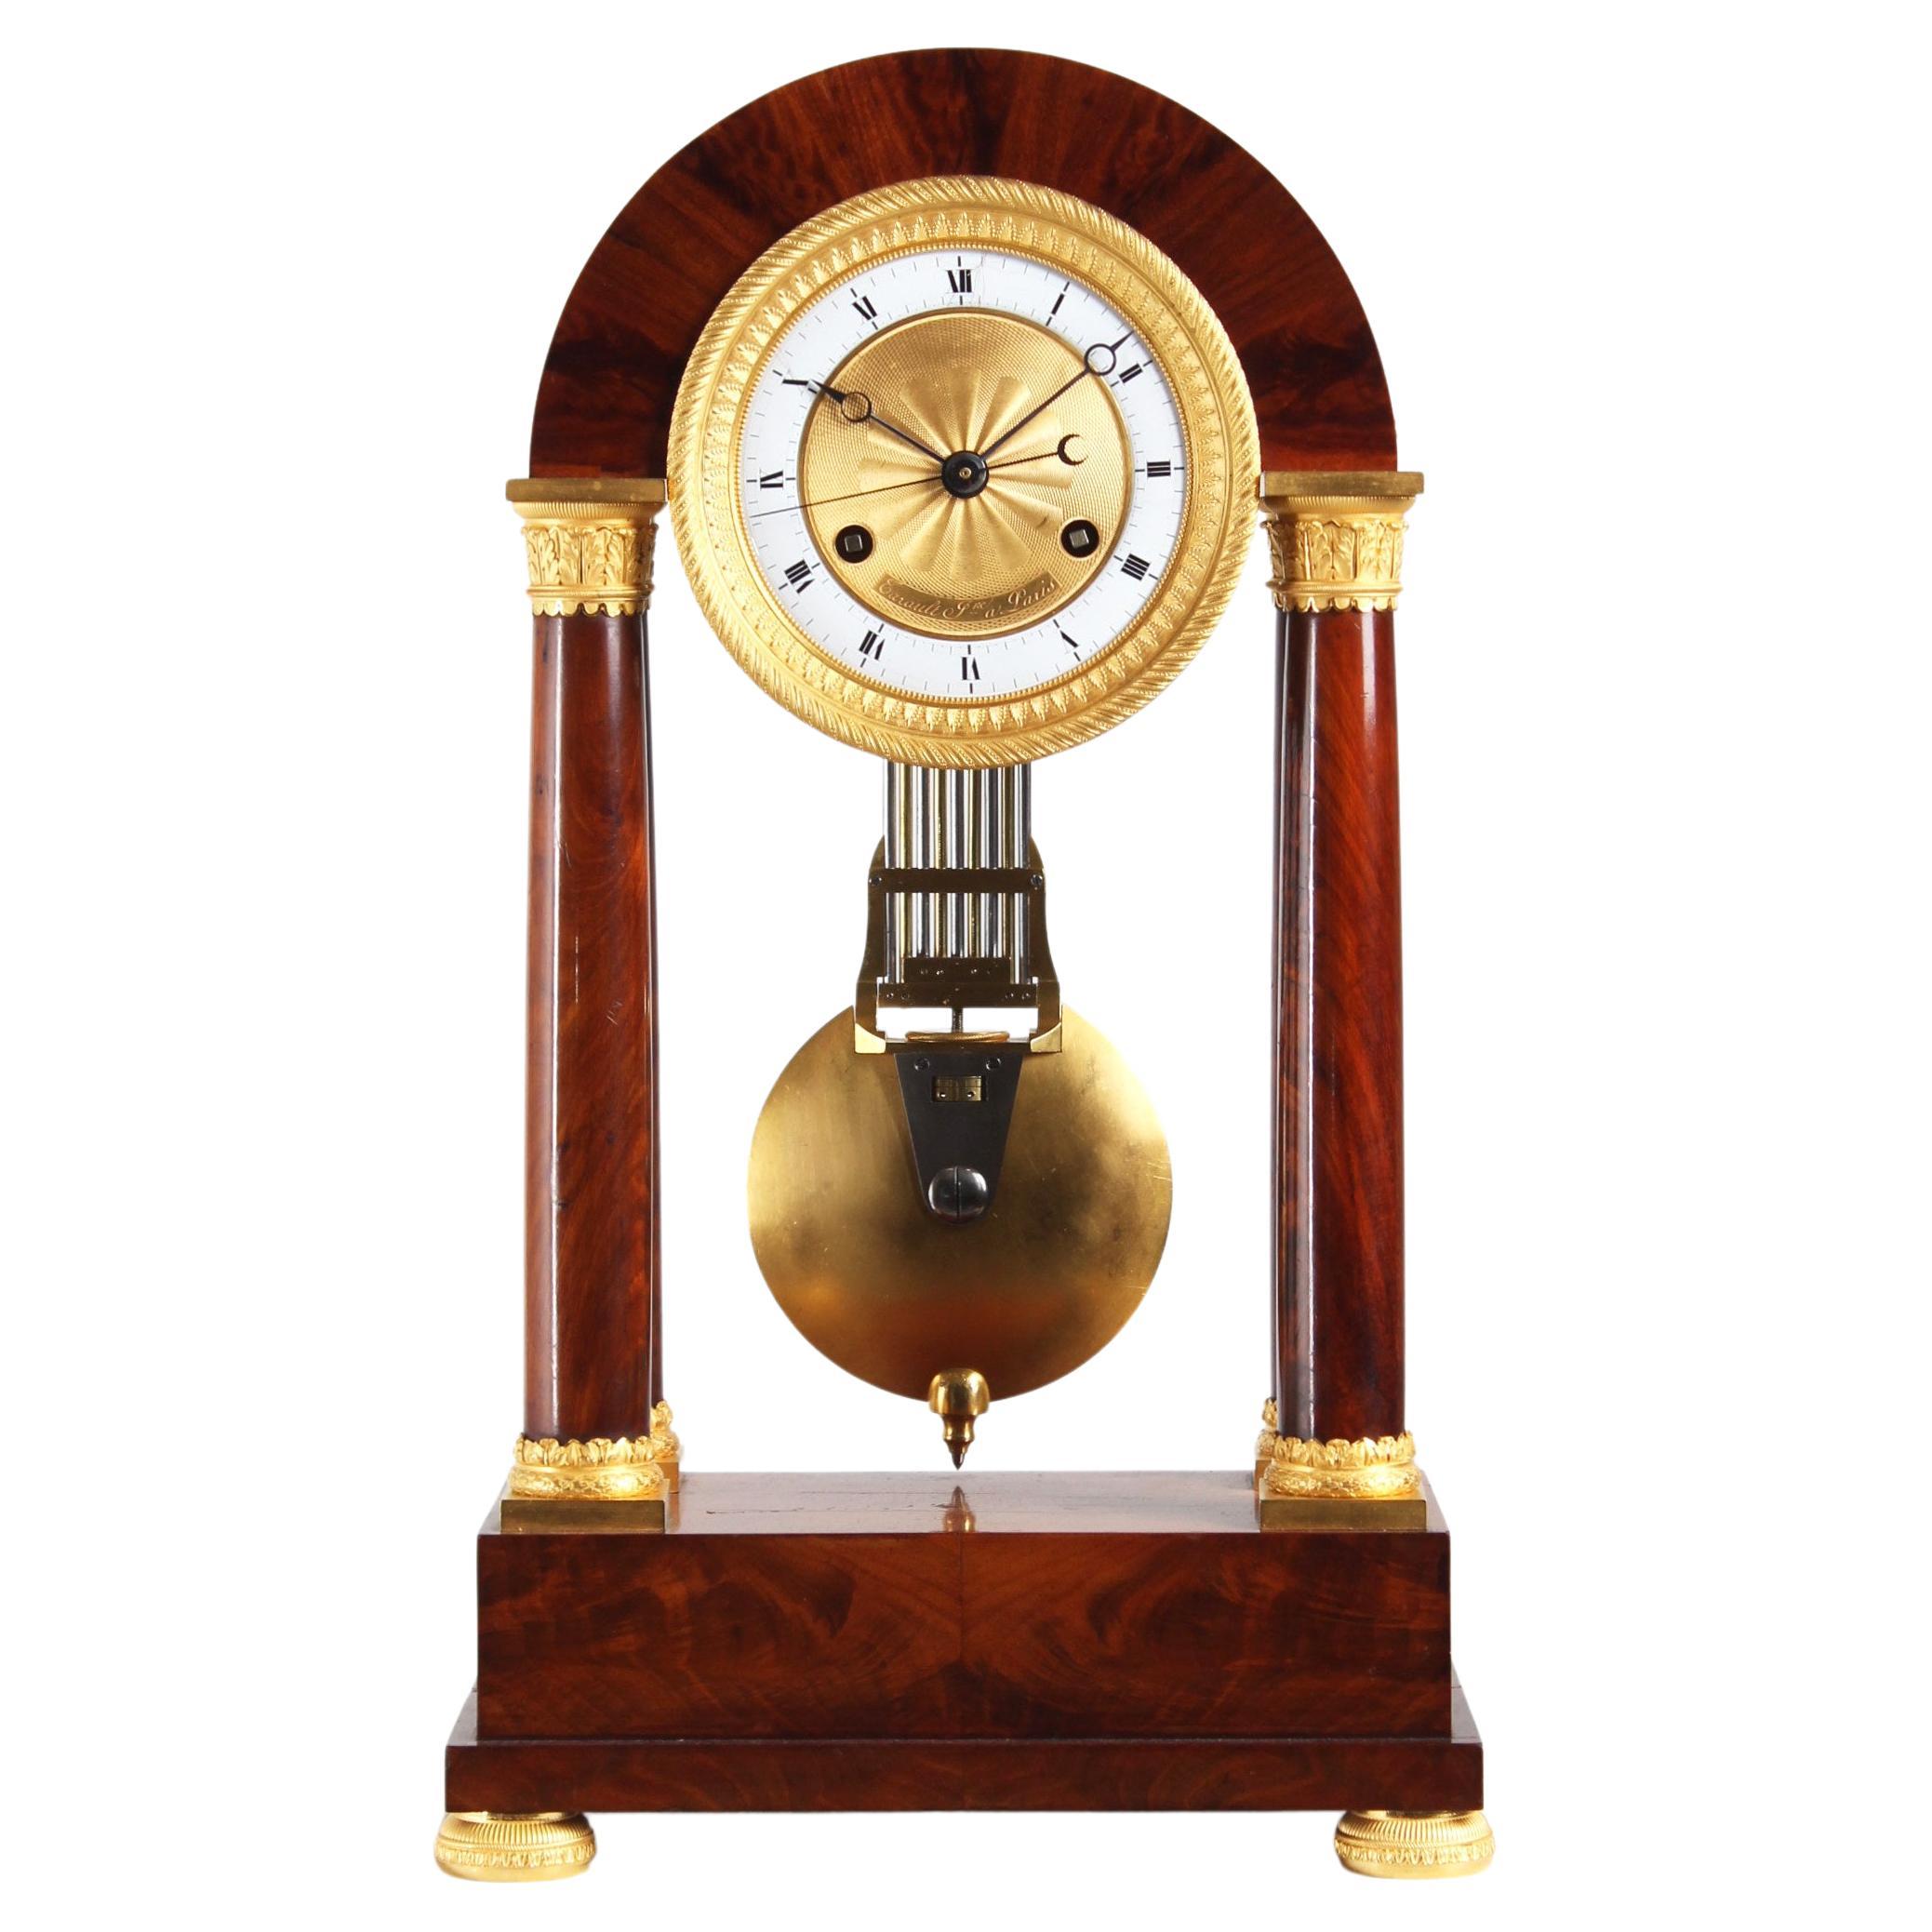 19th Century Regulator by Tarault Jeune, Precision Portal Clock, Paris, c. 1825